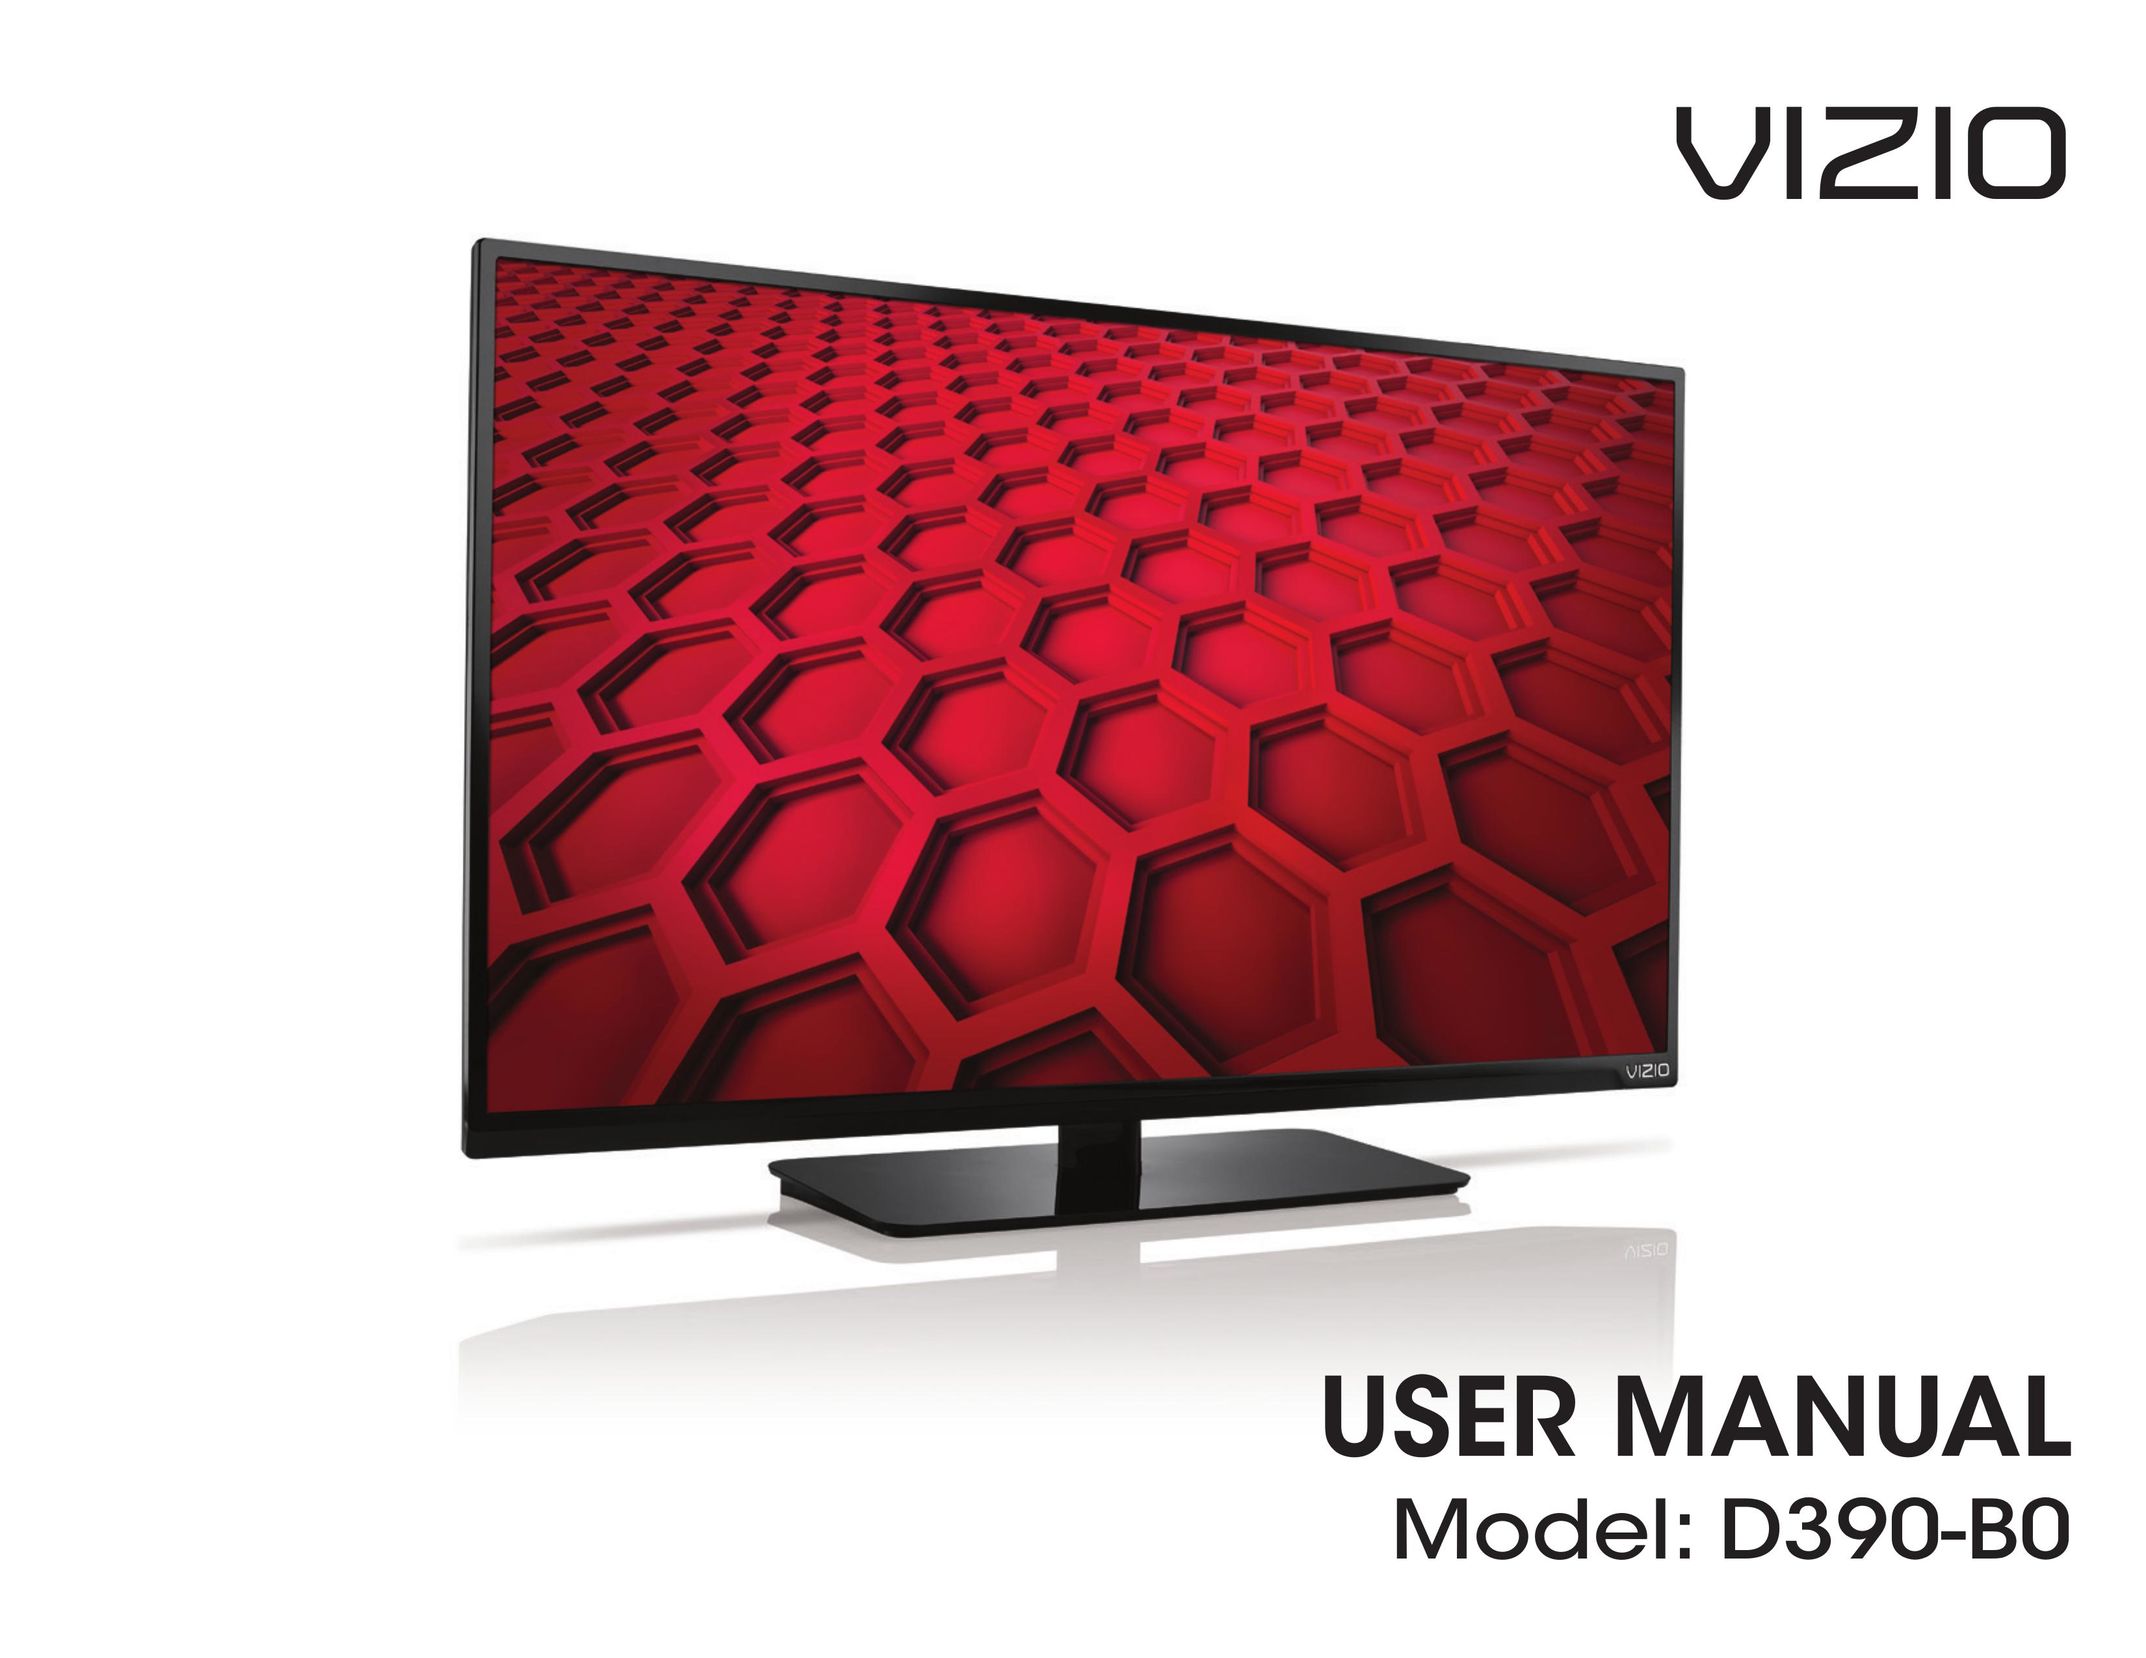 Vizio D390-B0 Flat Panel Television User Manual